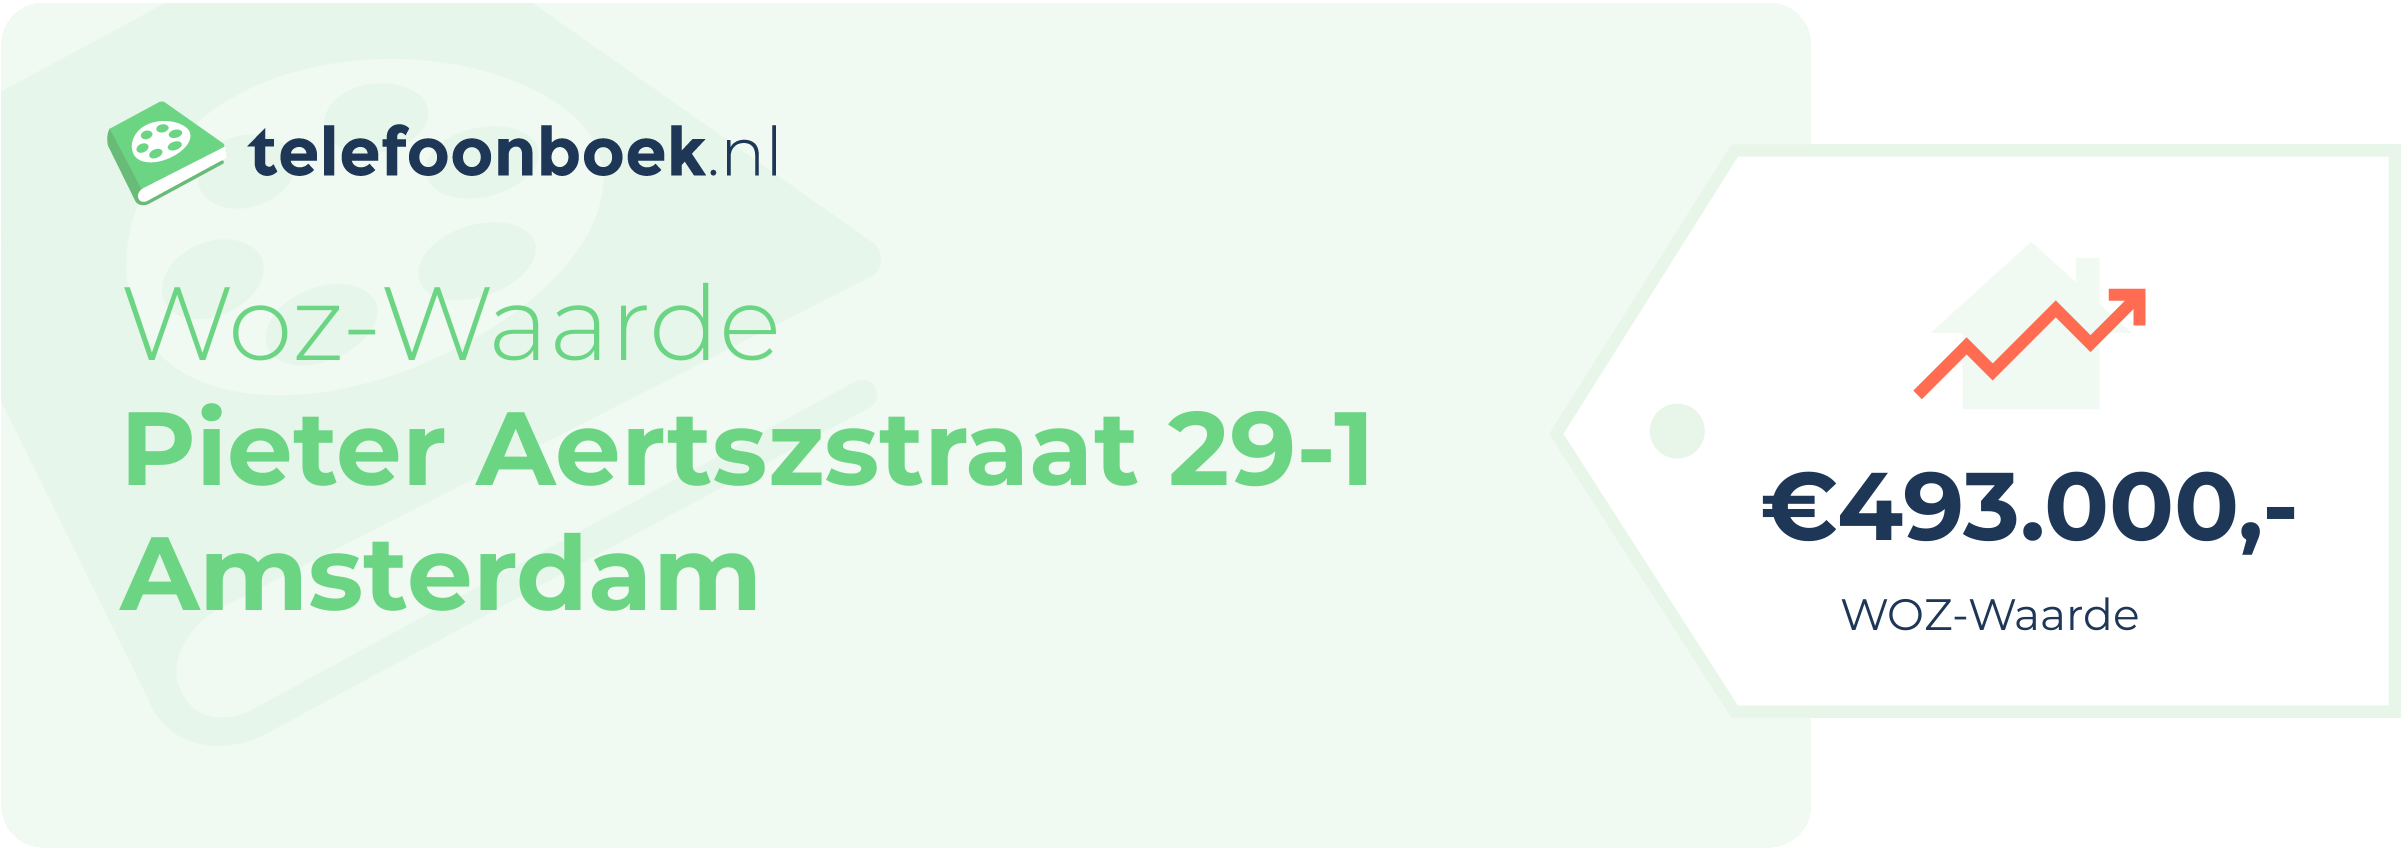 WOZ-waarde Pieter Aertszstraat 29-1 Amsterdam